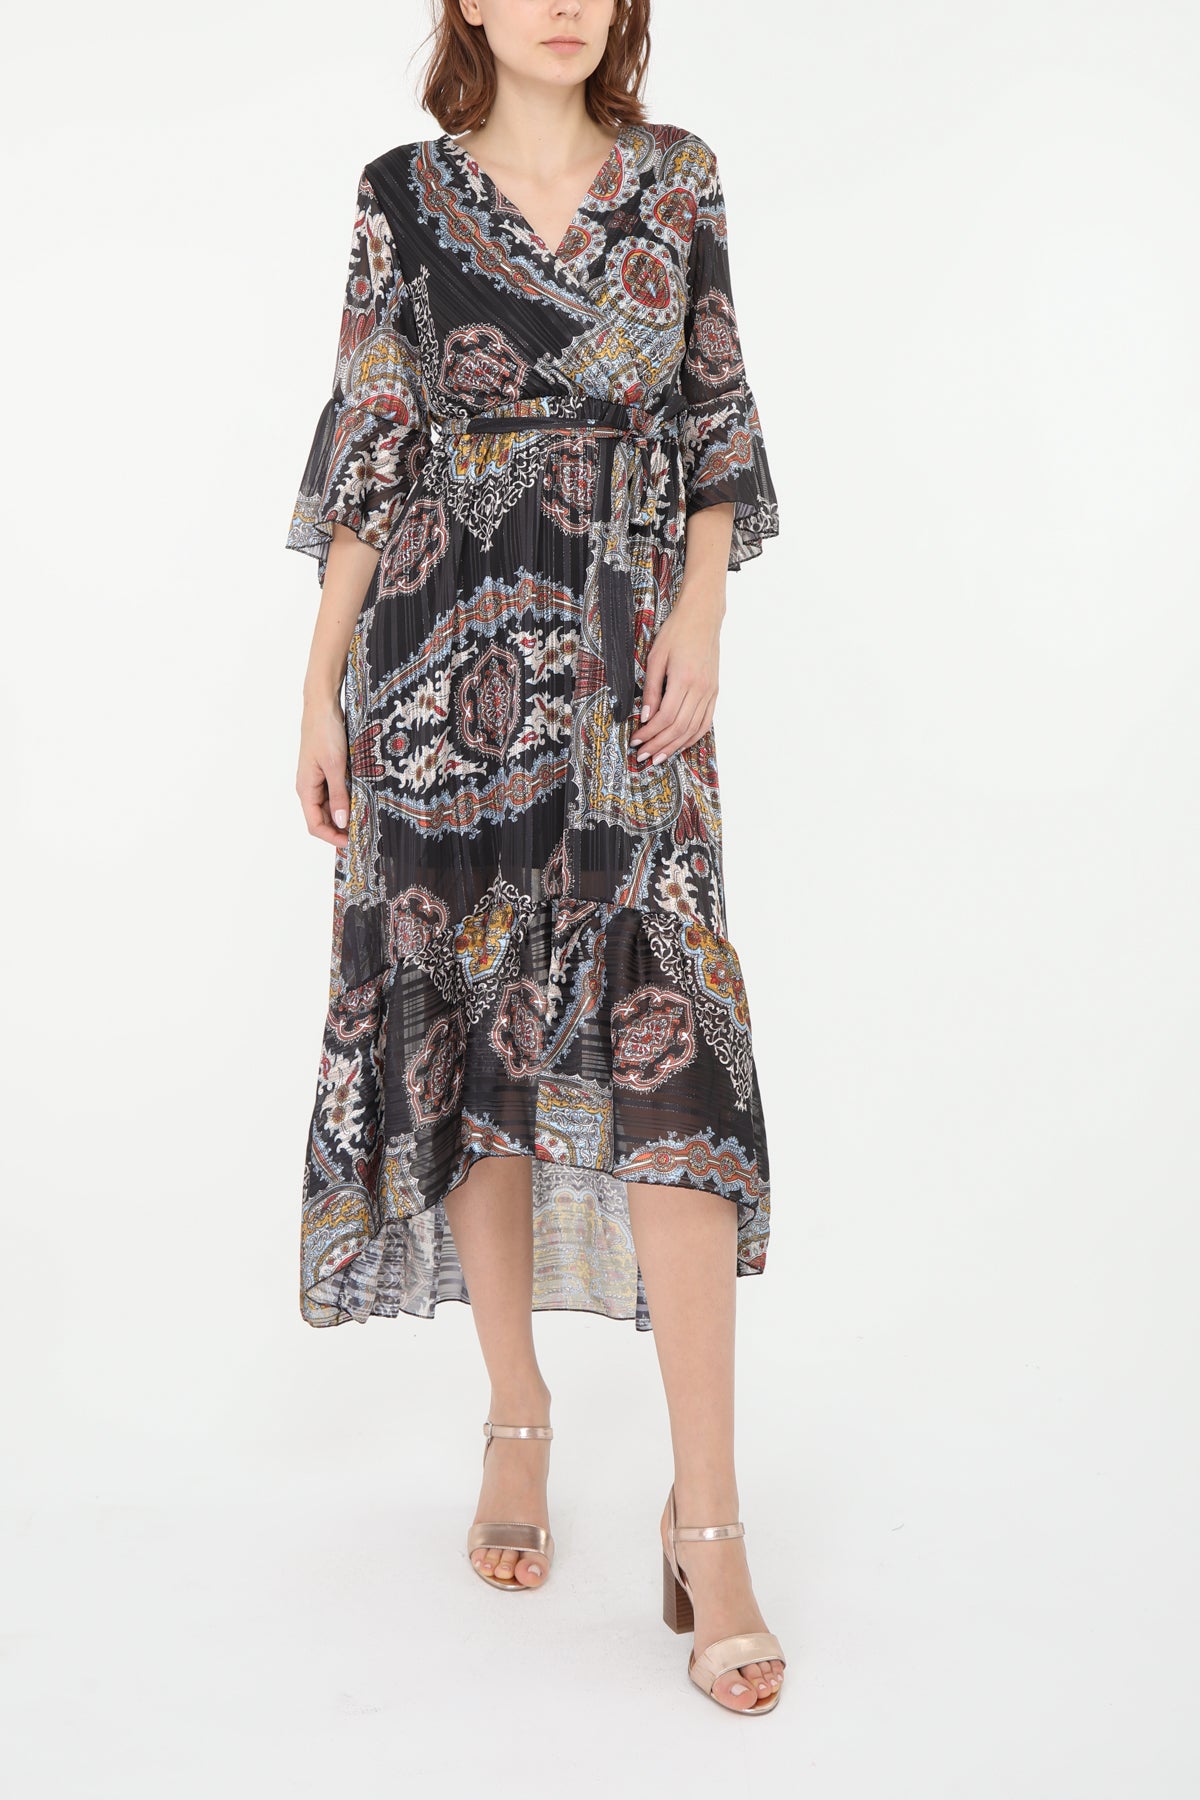 Niamh Black Paisley Print Dress